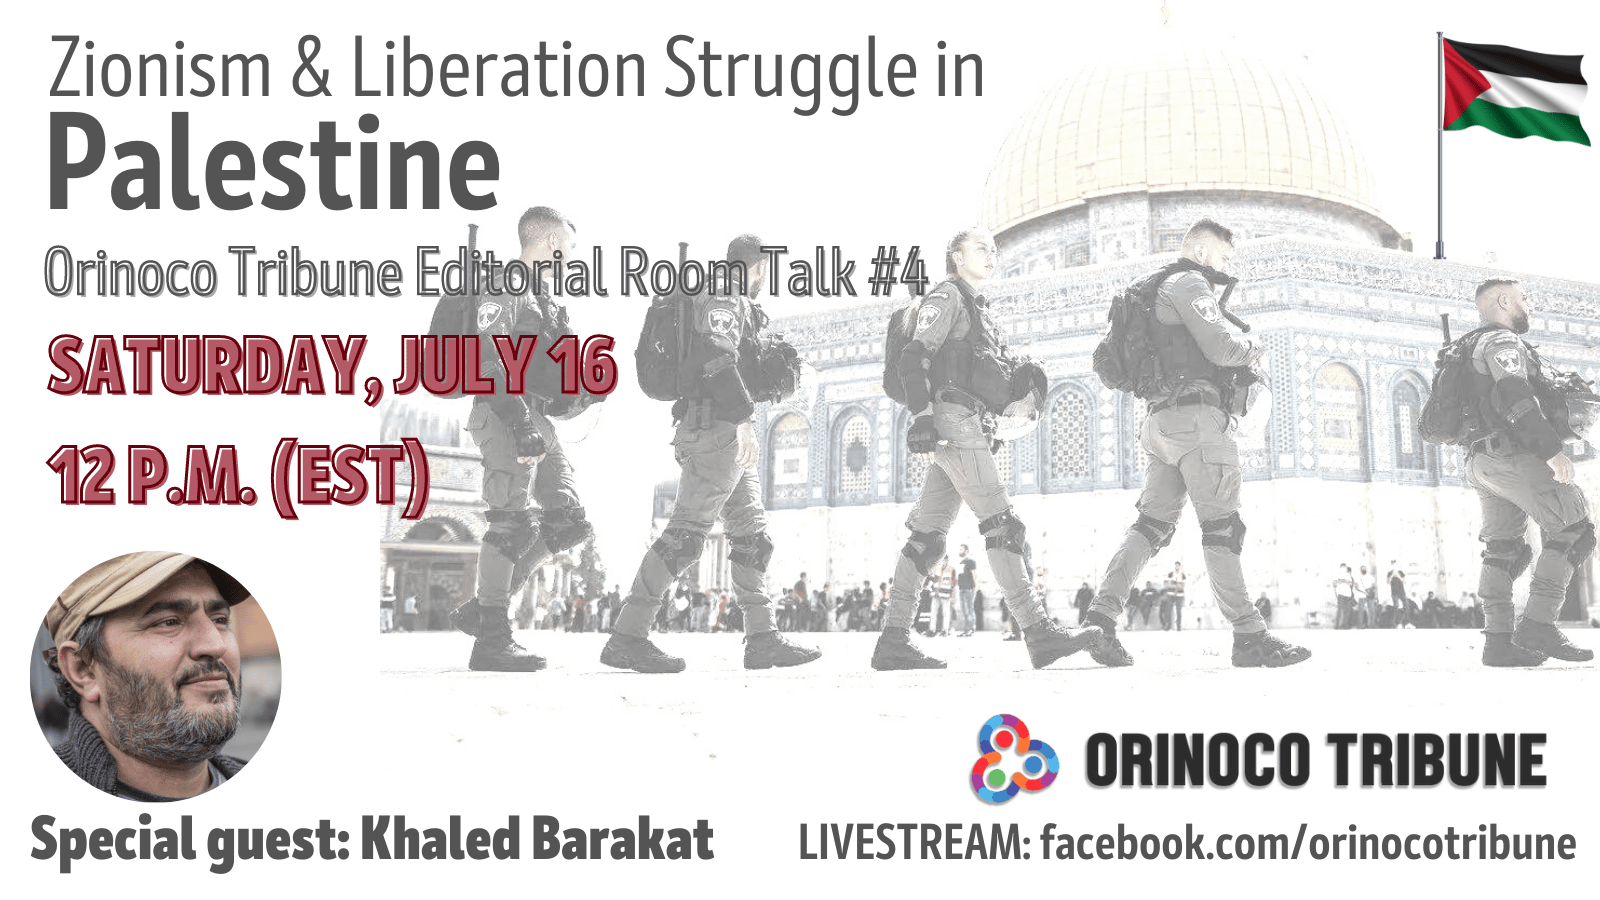 Flyer for Orinoco Tribune's Editorial Talk #4 featuring Palestinian author and activist Khaled Barakat. Photo: Orinoco Tribune.